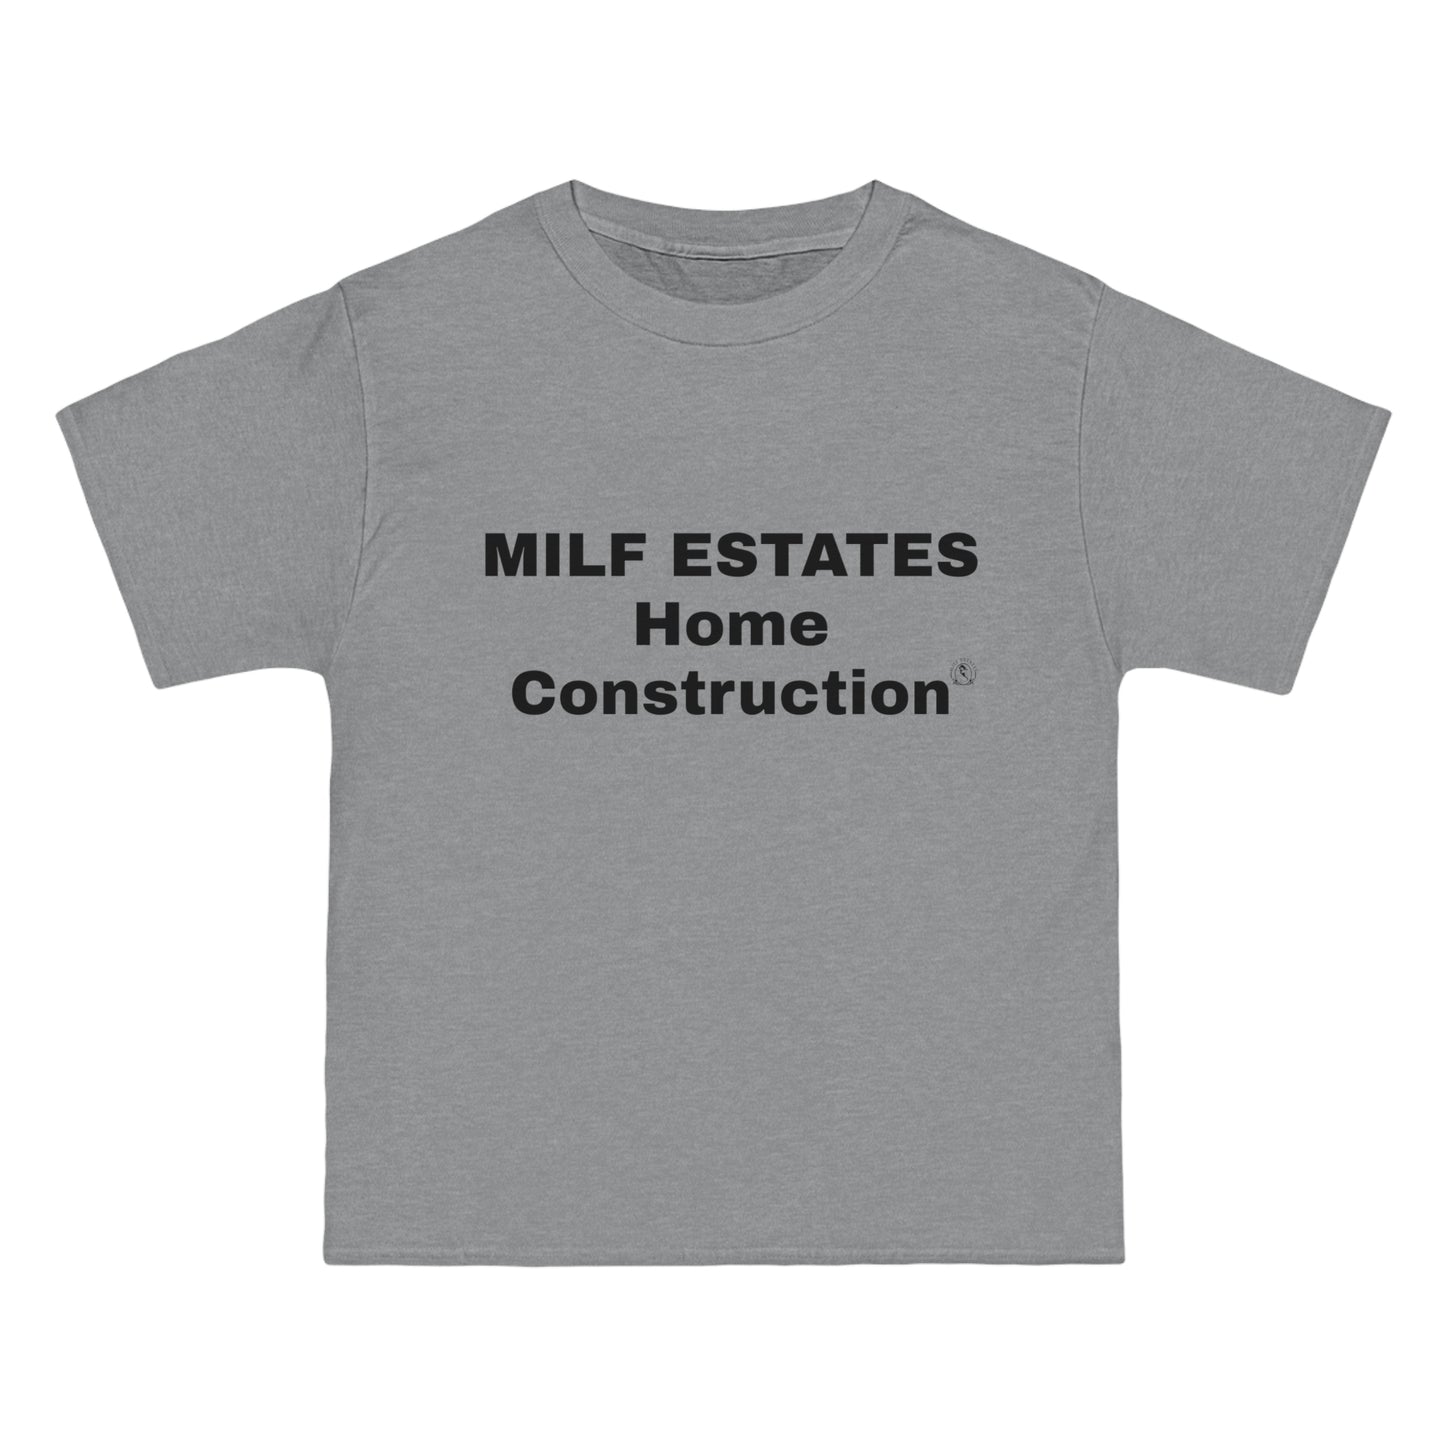 MILF ESTATES Home Construction